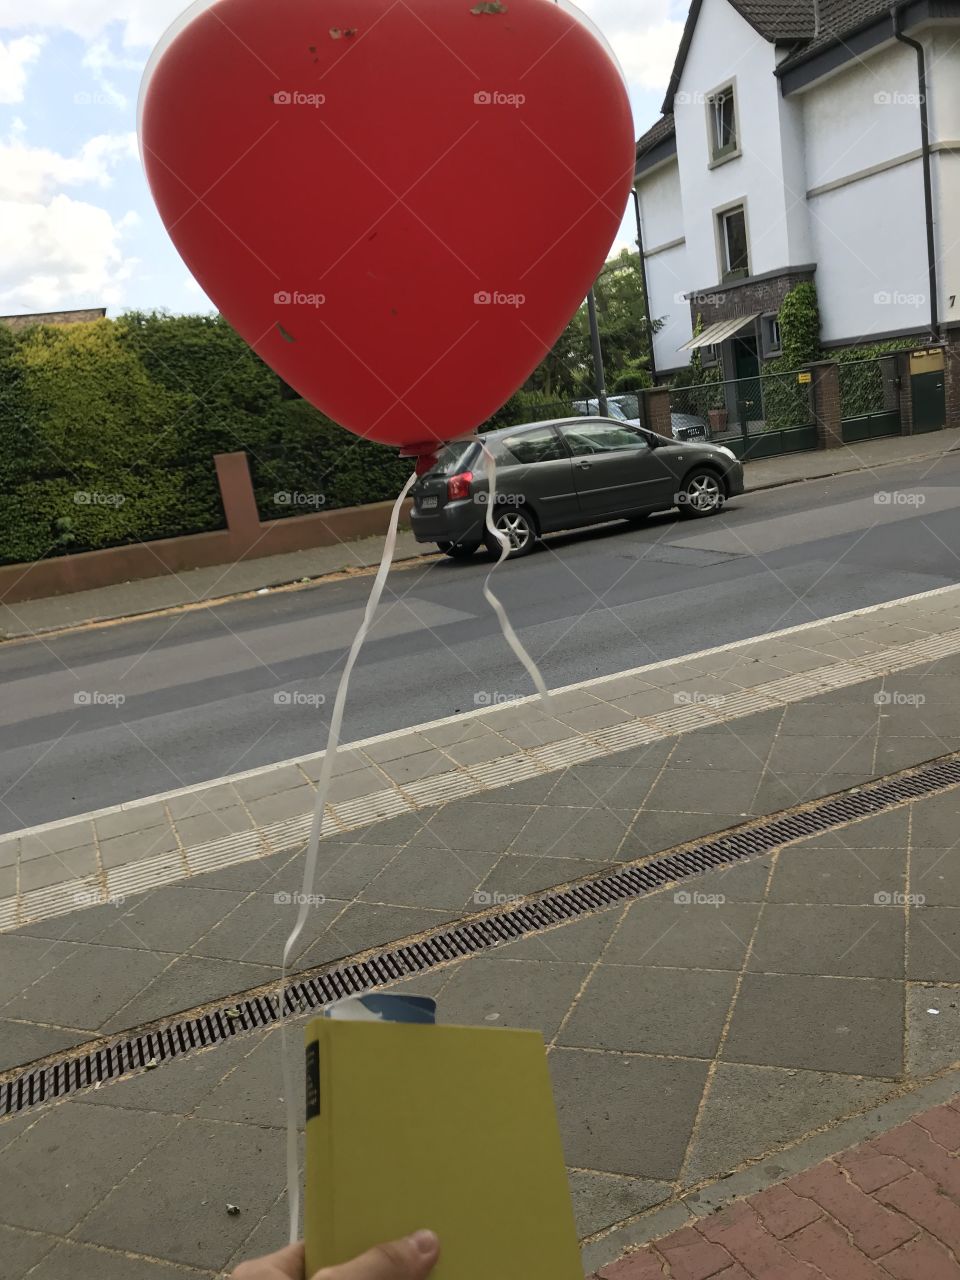 Baloon 